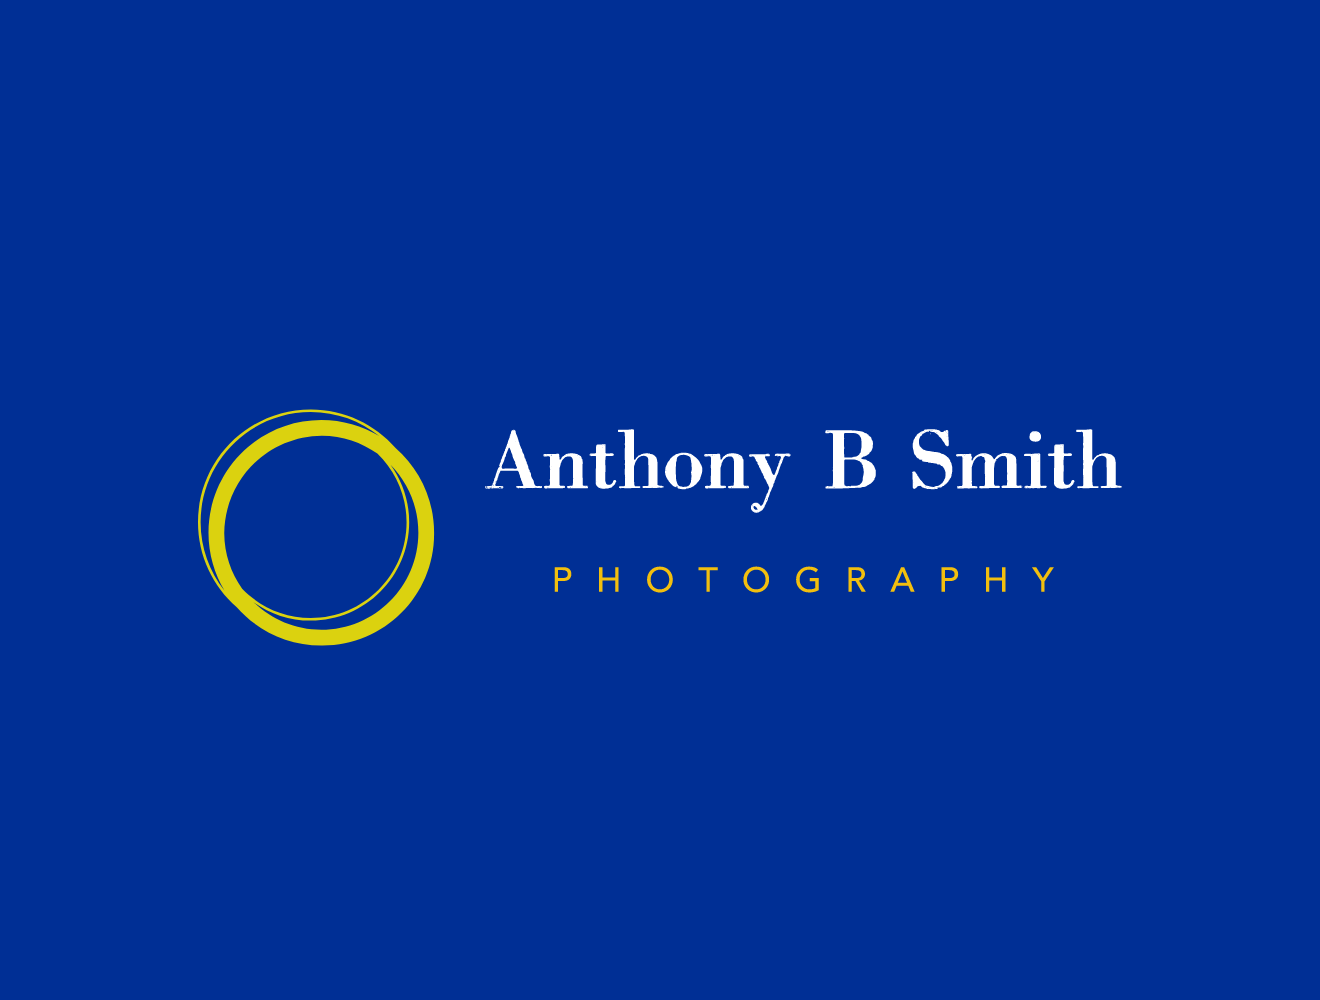 absmithphotography